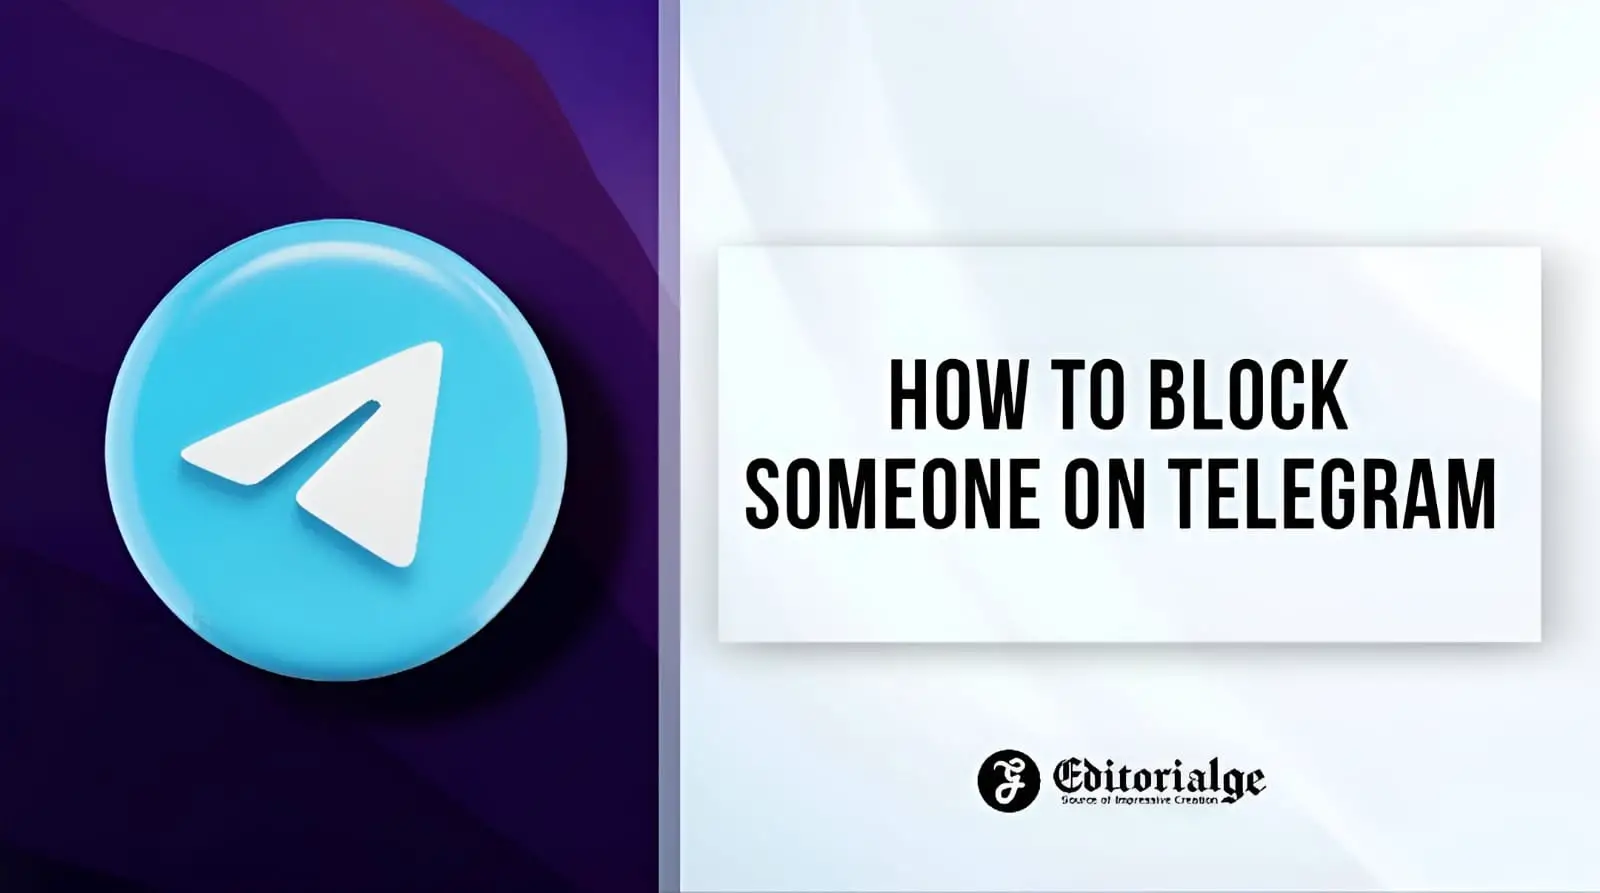 How to block someone on telegram